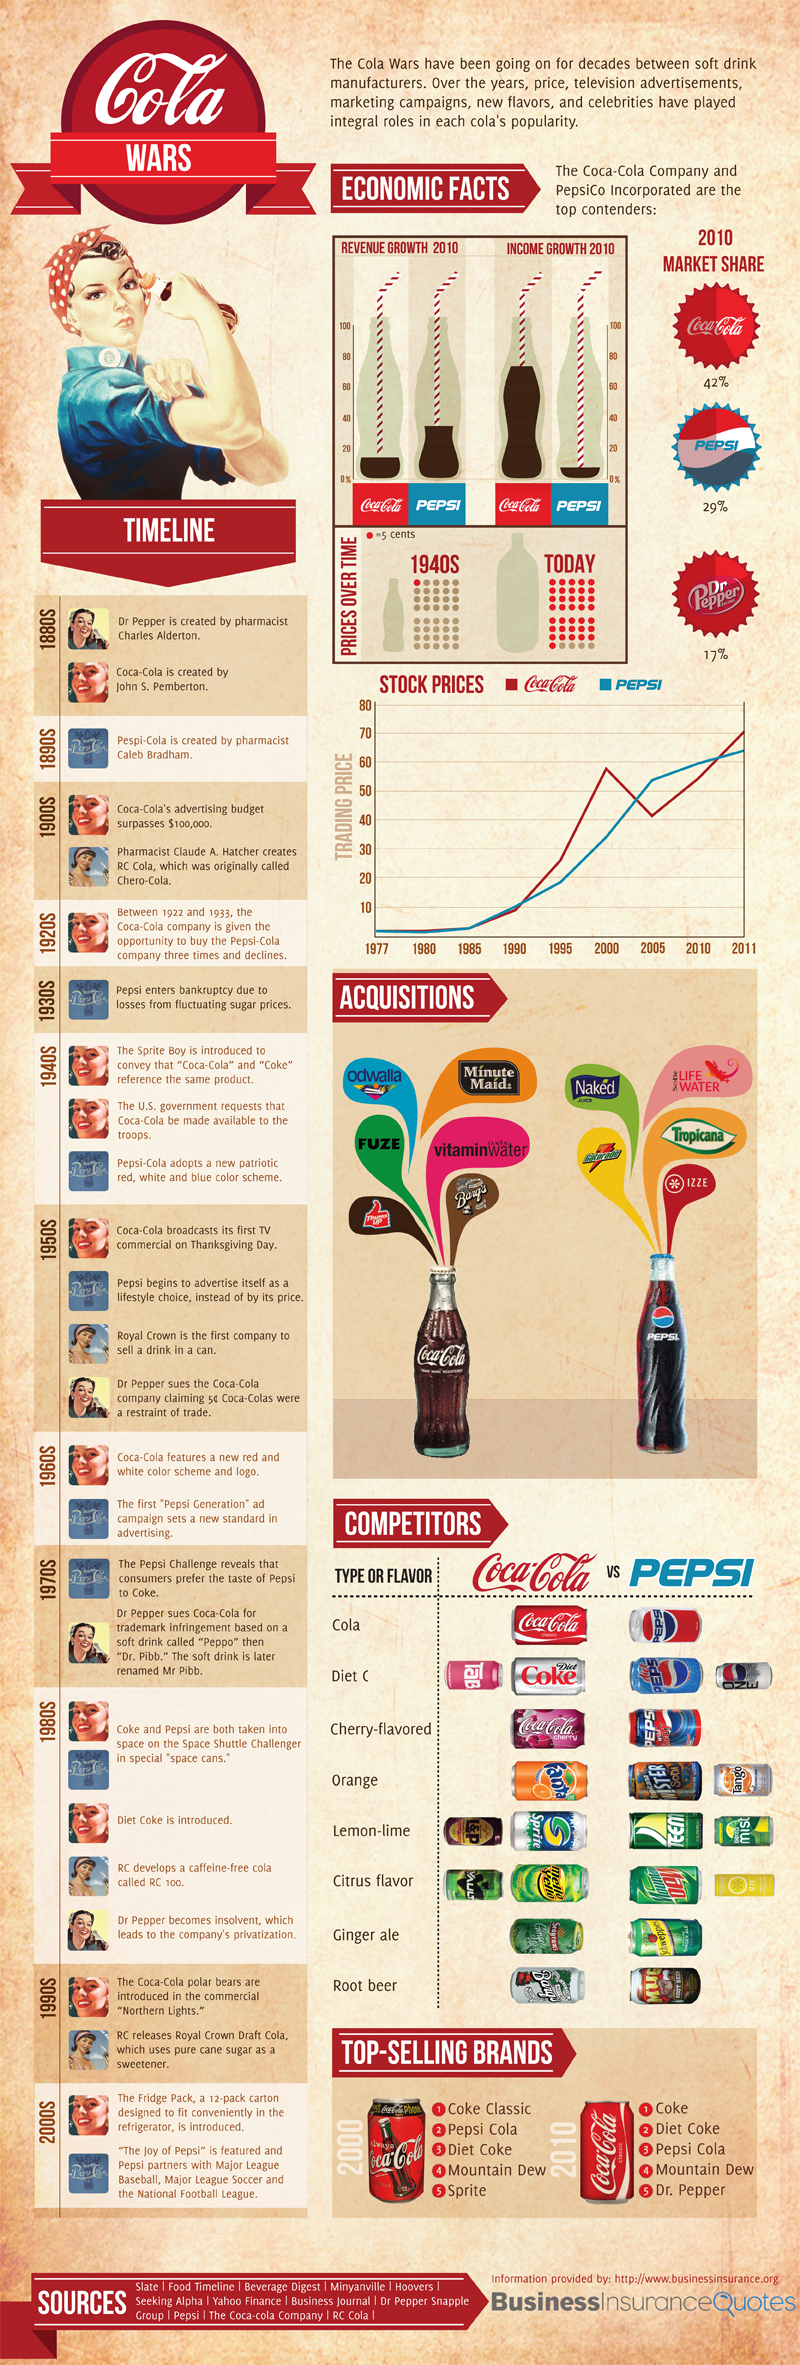 5 important jobs facts of coca-cola